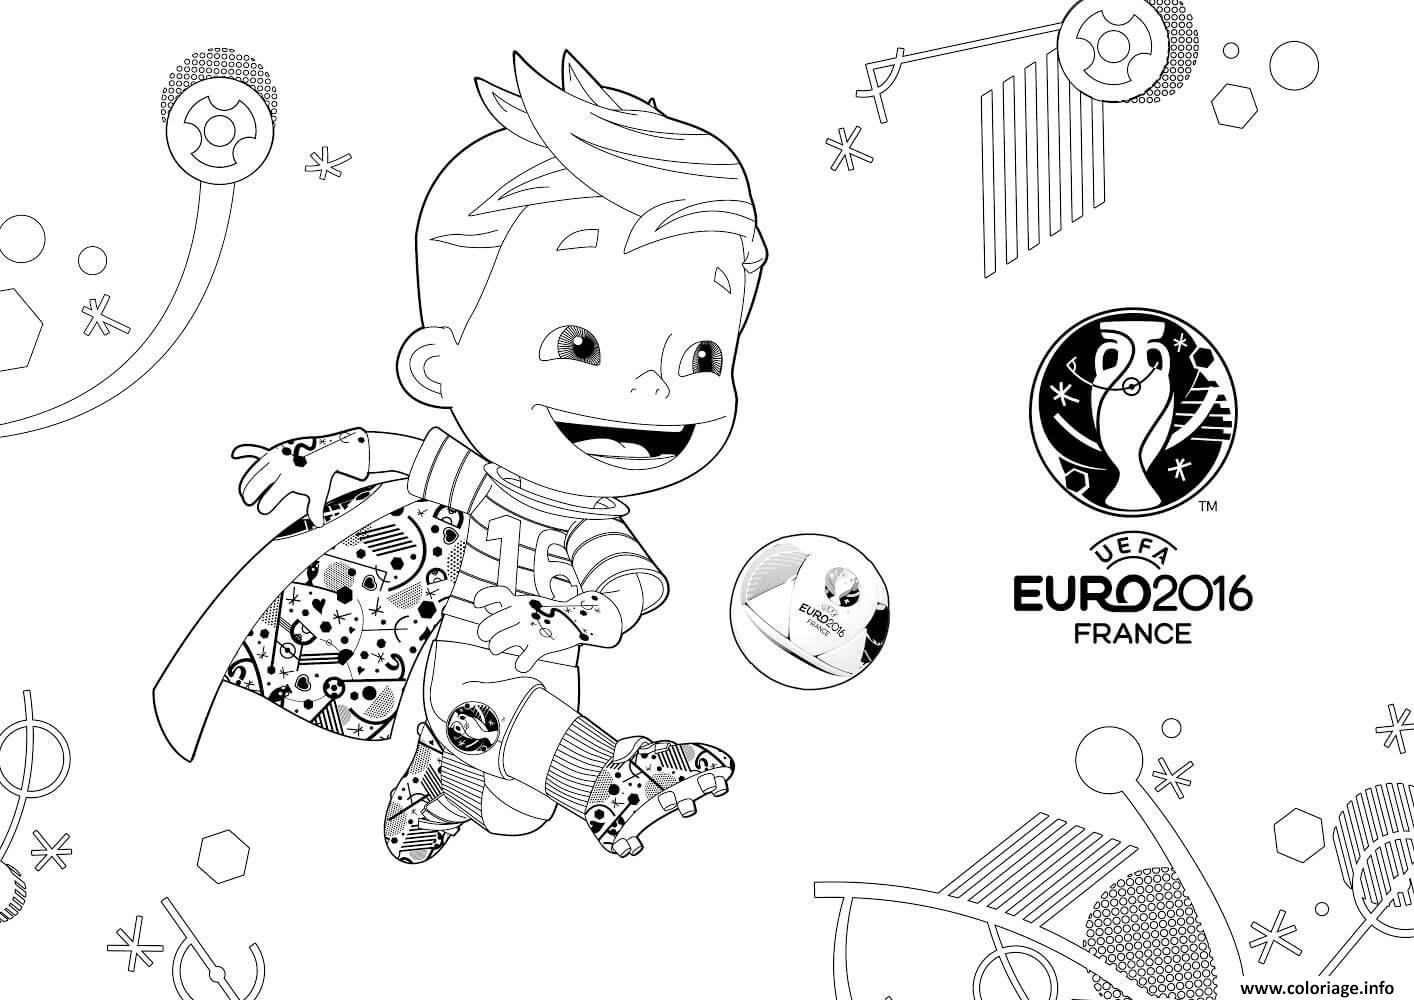 Coloriage Mascotte Euro 2016 France Uefa Dessin   Imprimer